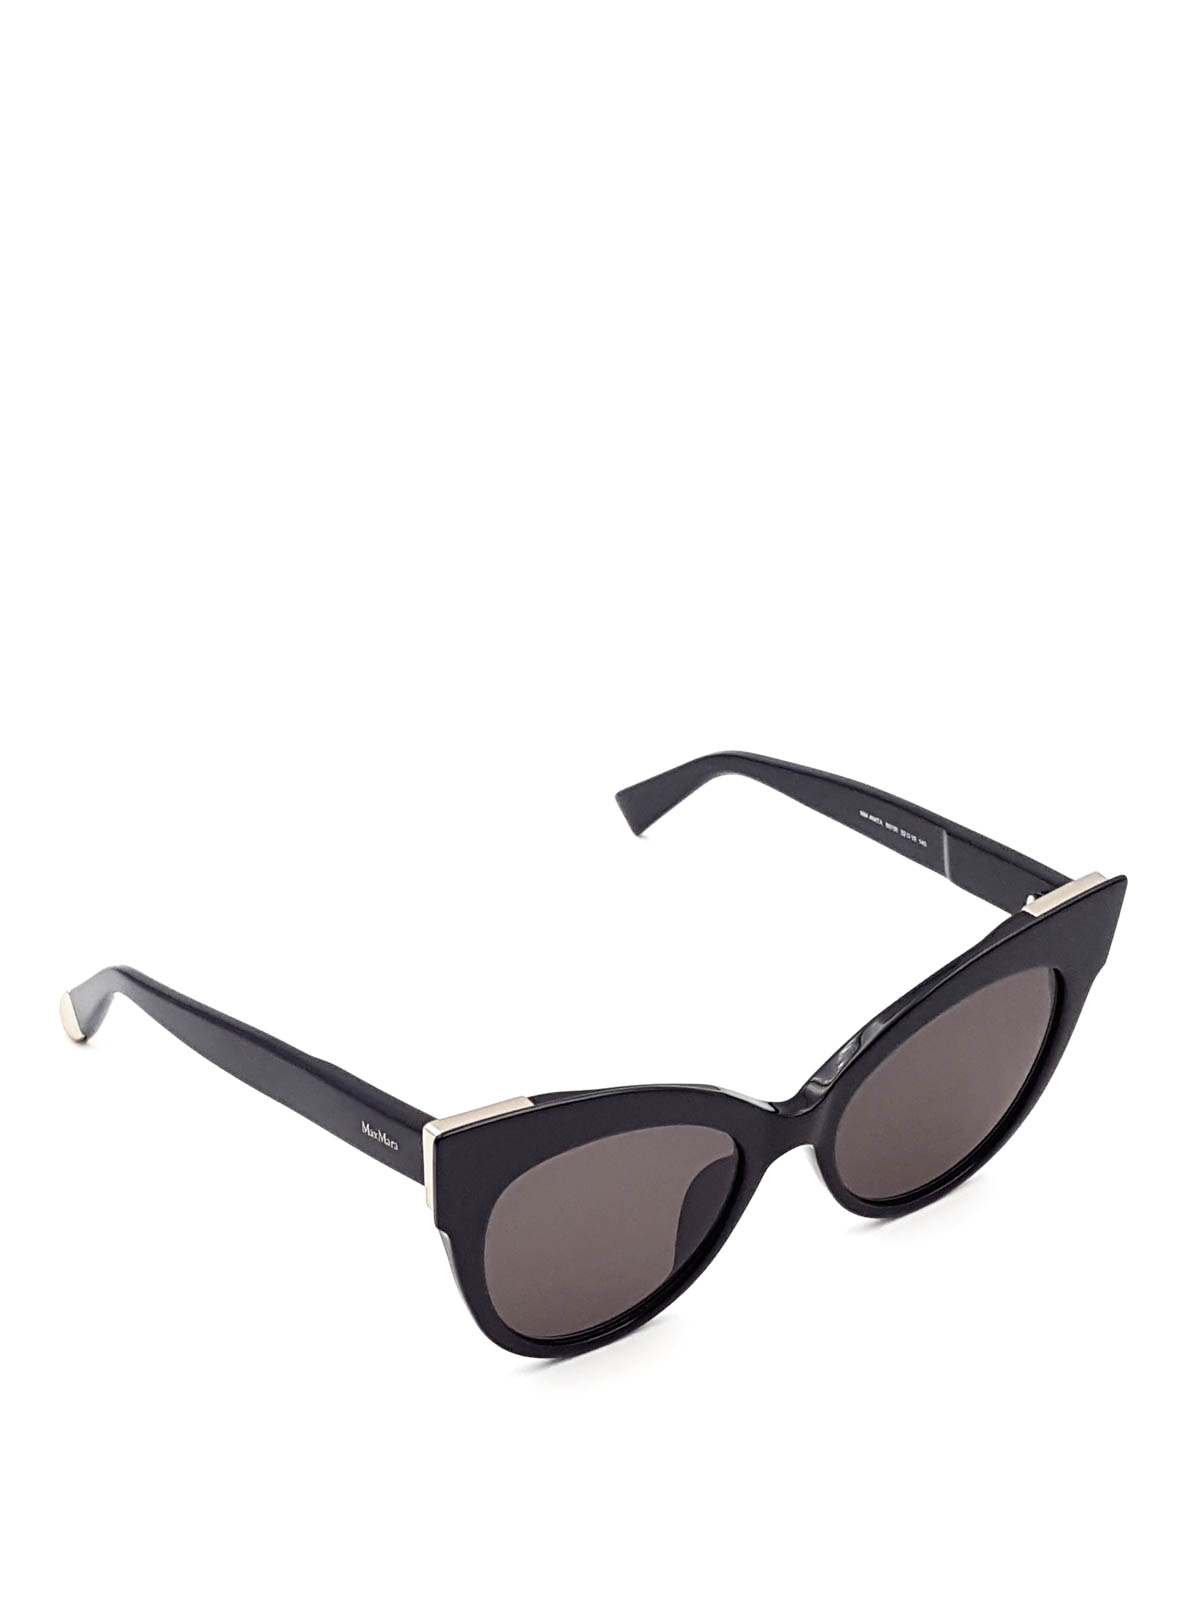 Sunglasses Max Mara - Anita cat eye sunglasses - ANITA807IR | iKRIX.com